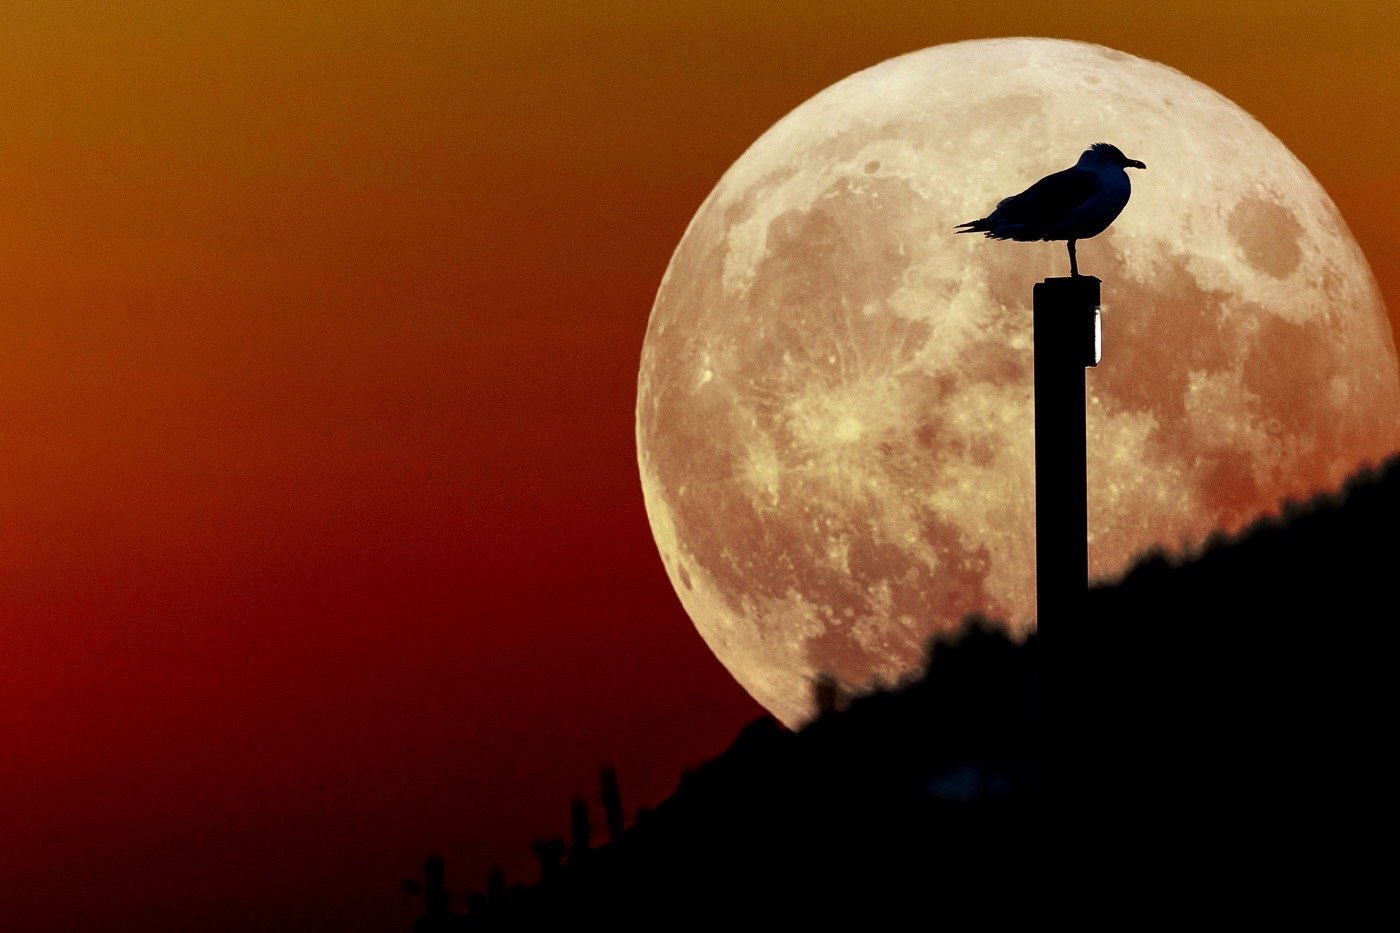 "The Gull Moon" by TA Loeffler